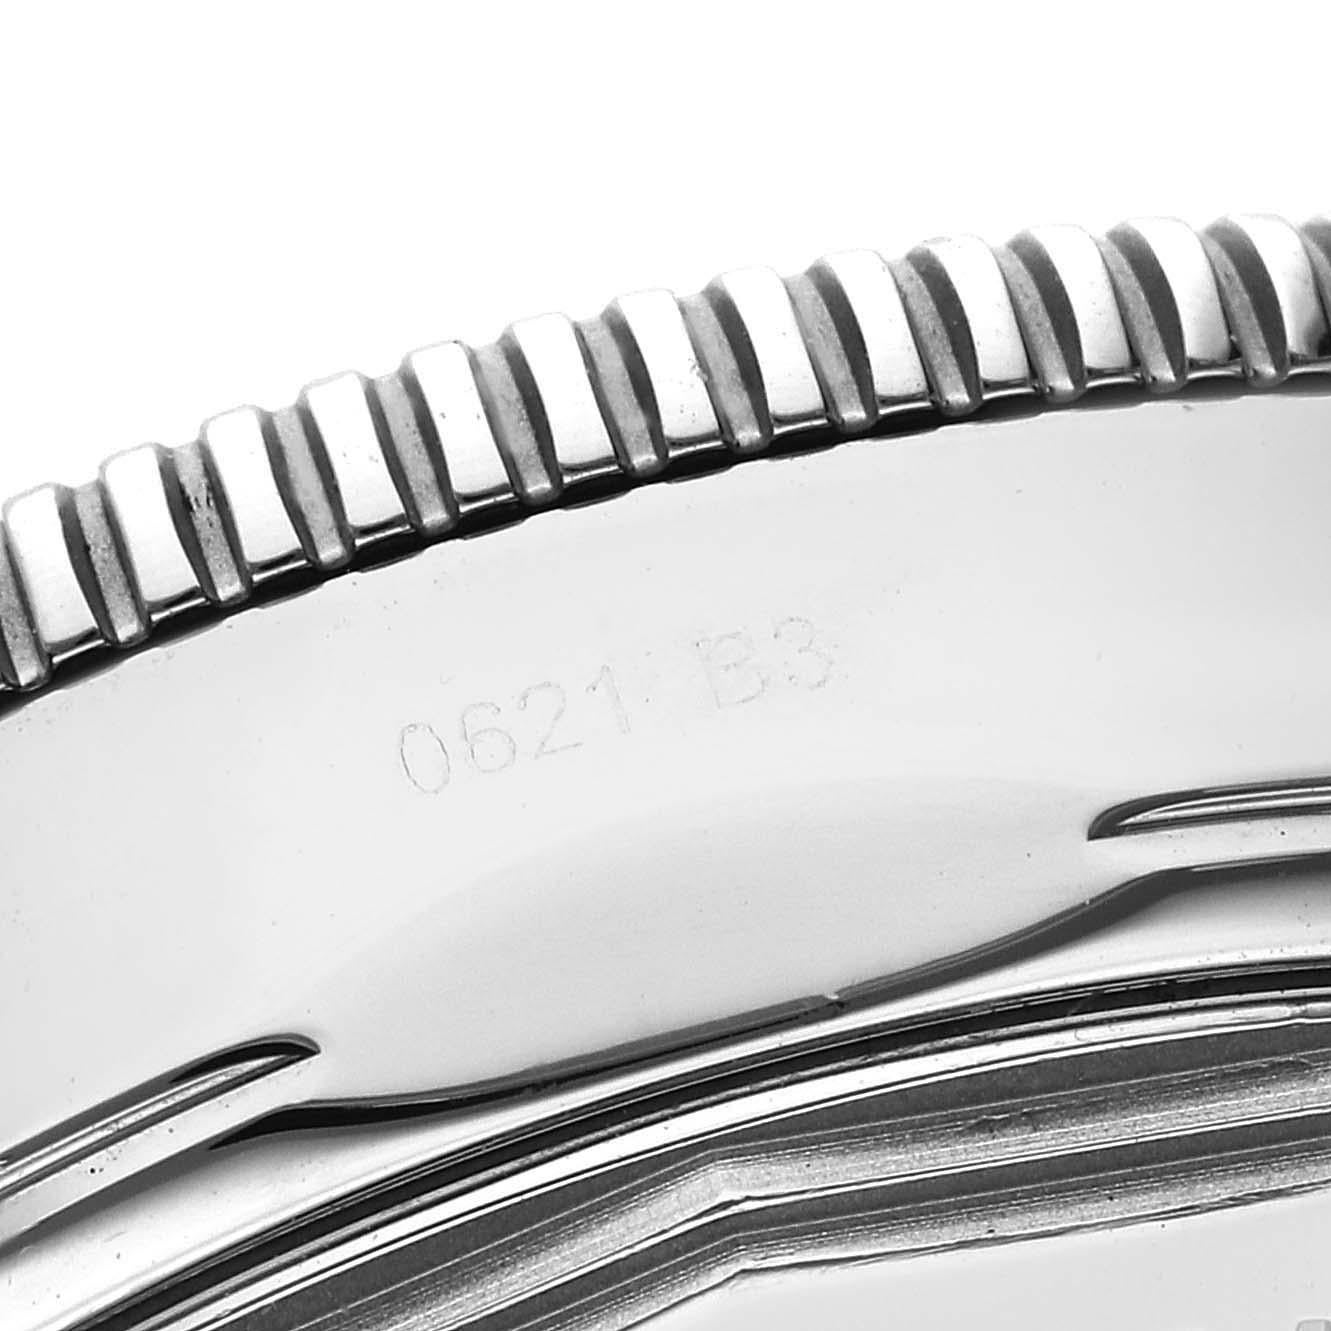 Breitling Superocean Heritage II 42 Black Dial Steel Mens Watch AB2010. Automatic self-winding B20 movement. Stainless steel case 42.0 mm in diameter. Stainless steel screwed-down crown. Black ceramic unidirectional revolving bezel. Scratch